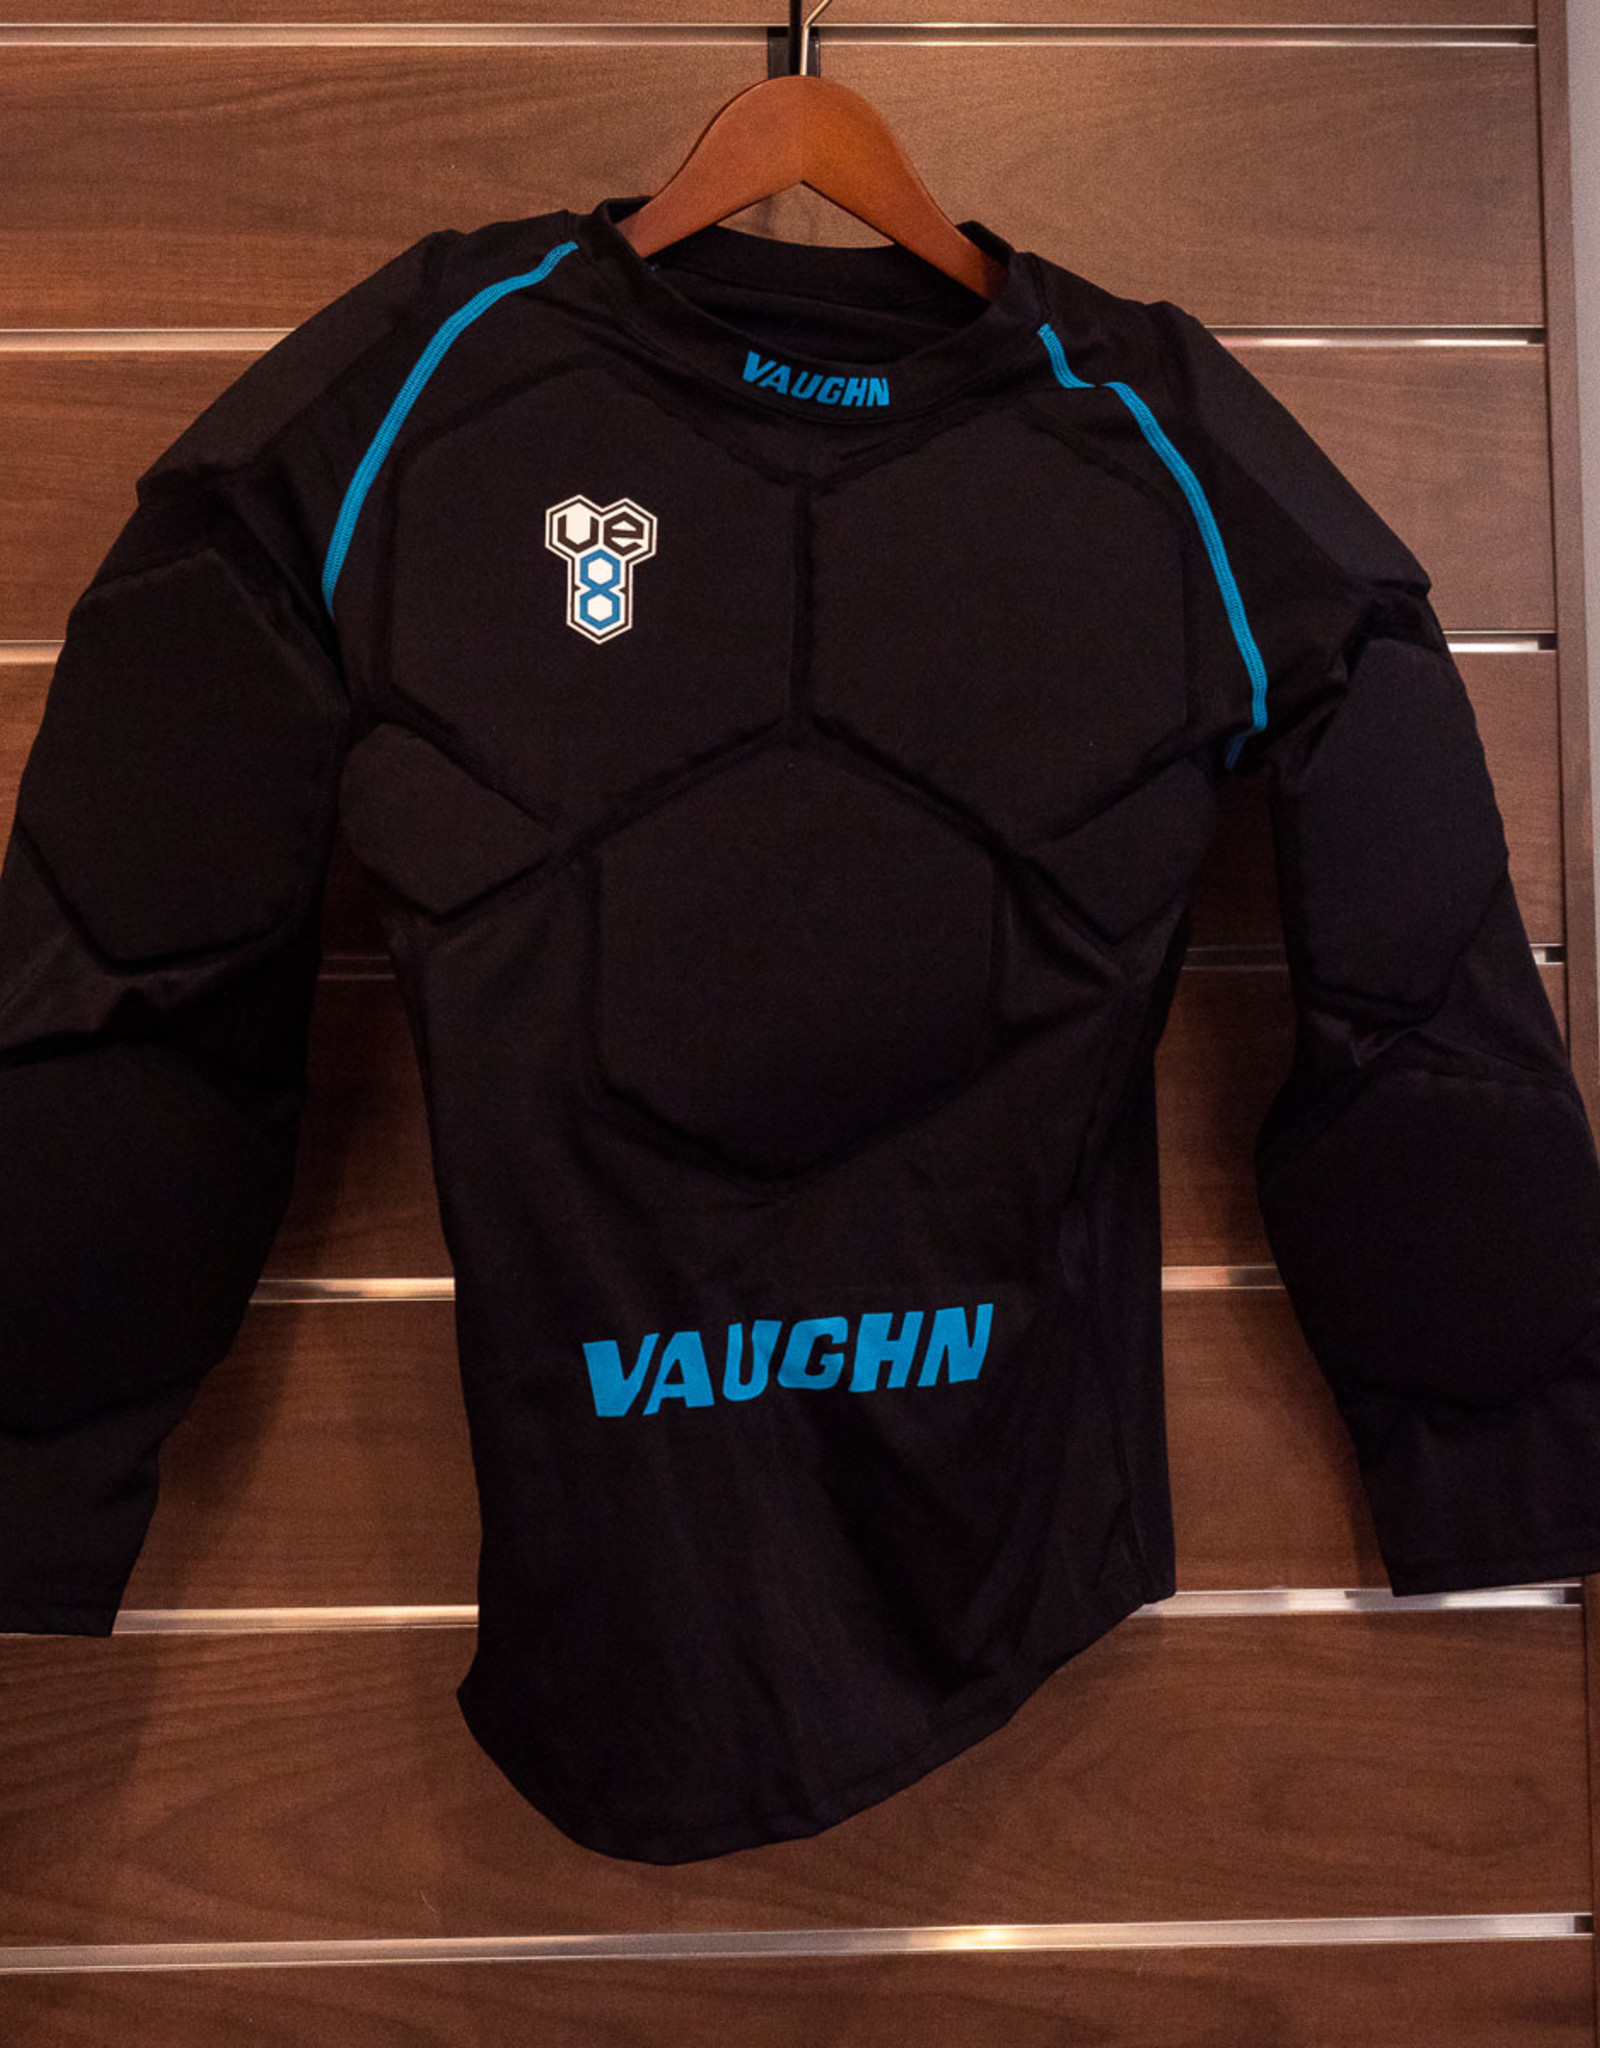 Vaughn Vaughn VE8 Padded Compression Shirt - XS